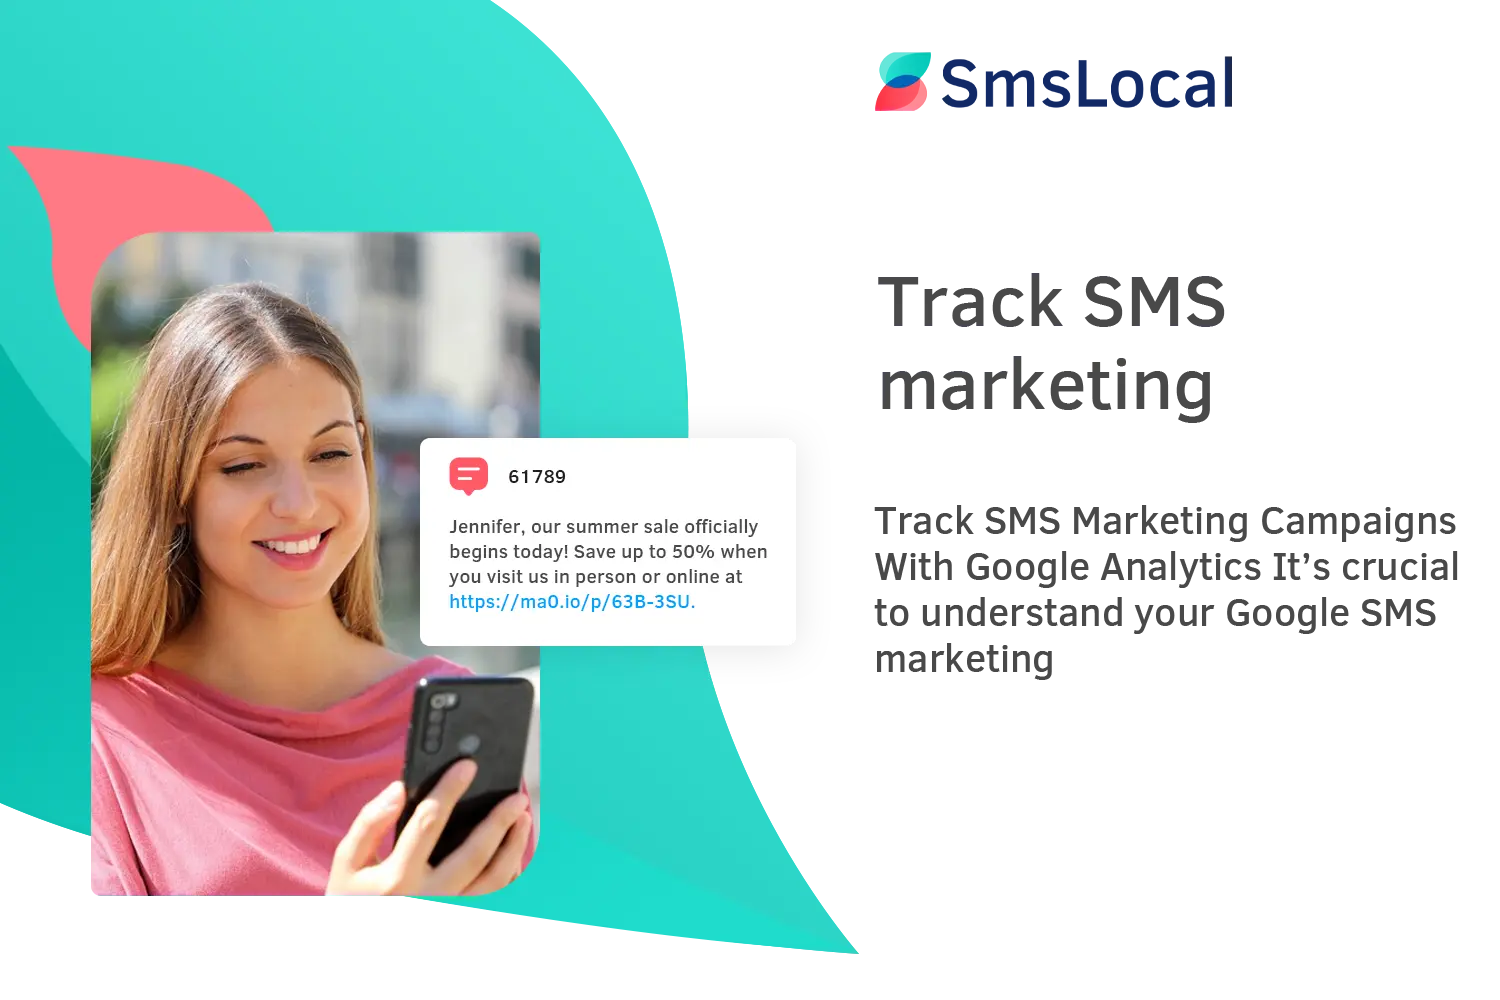 Track-SMS-marketing